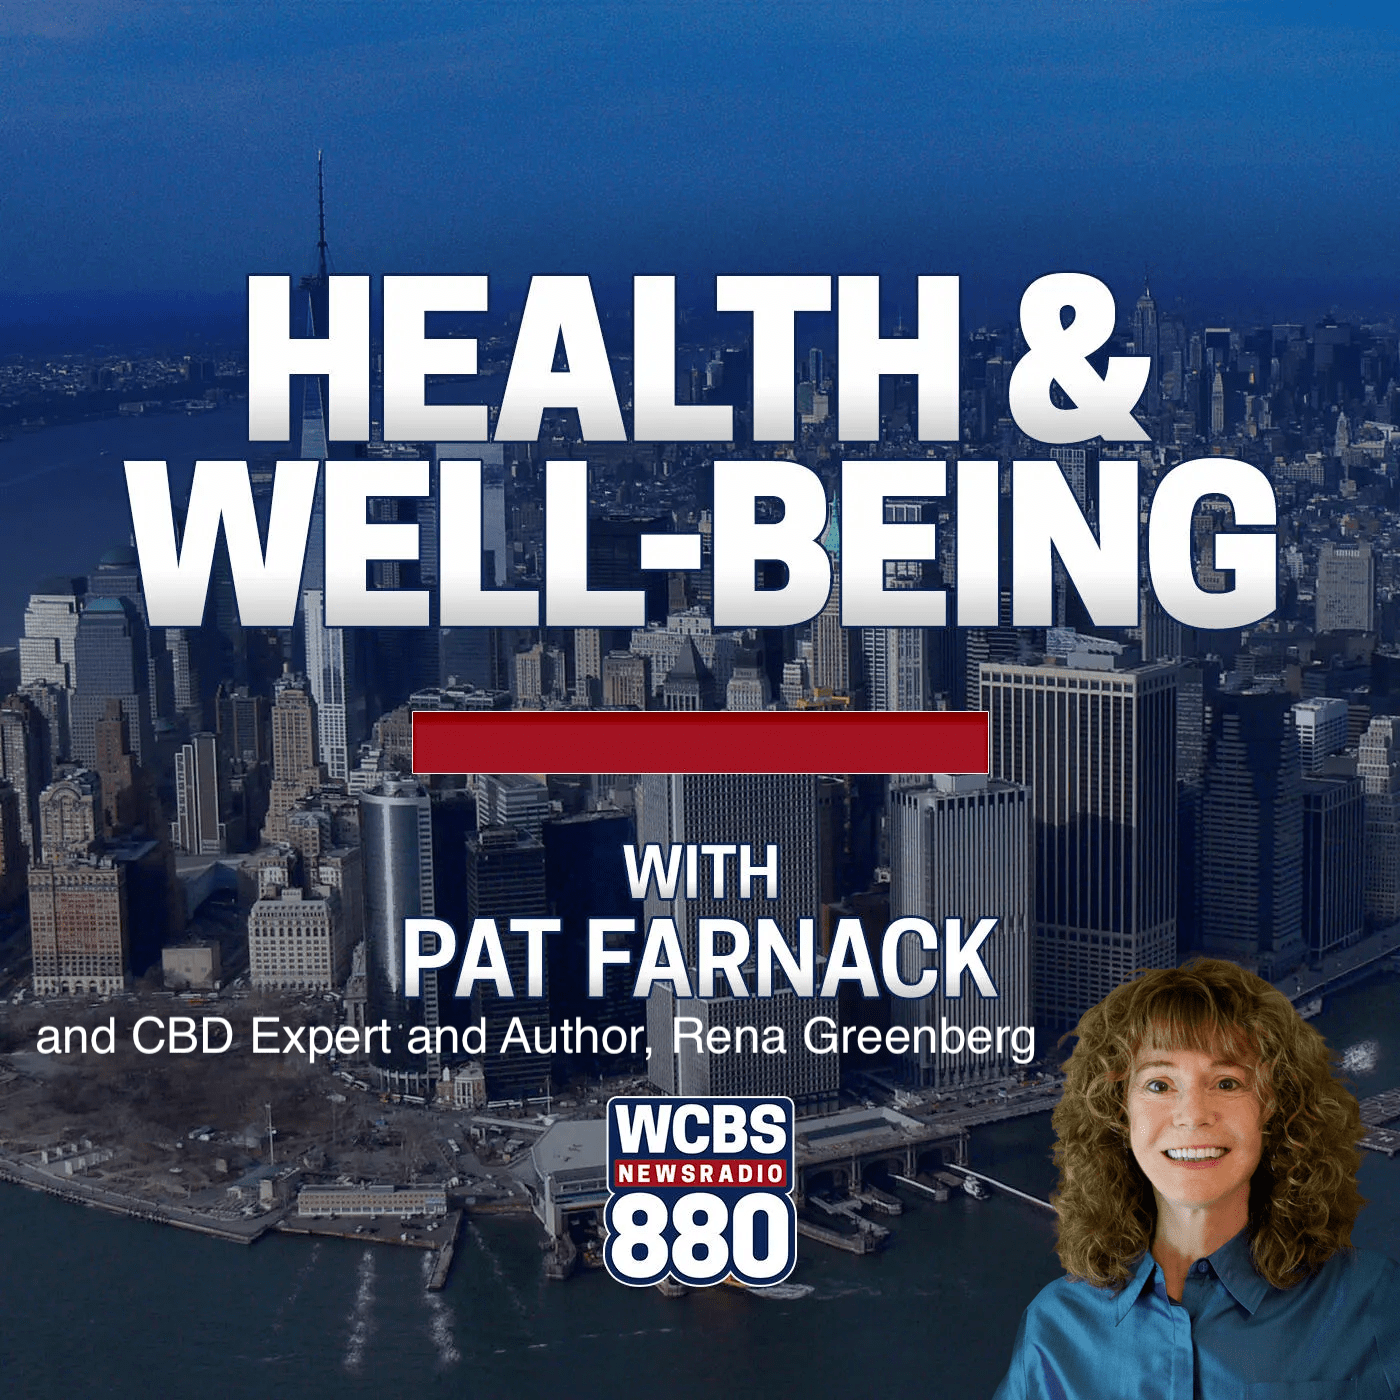 Rena on Health & Well-Being WCBS News Radio